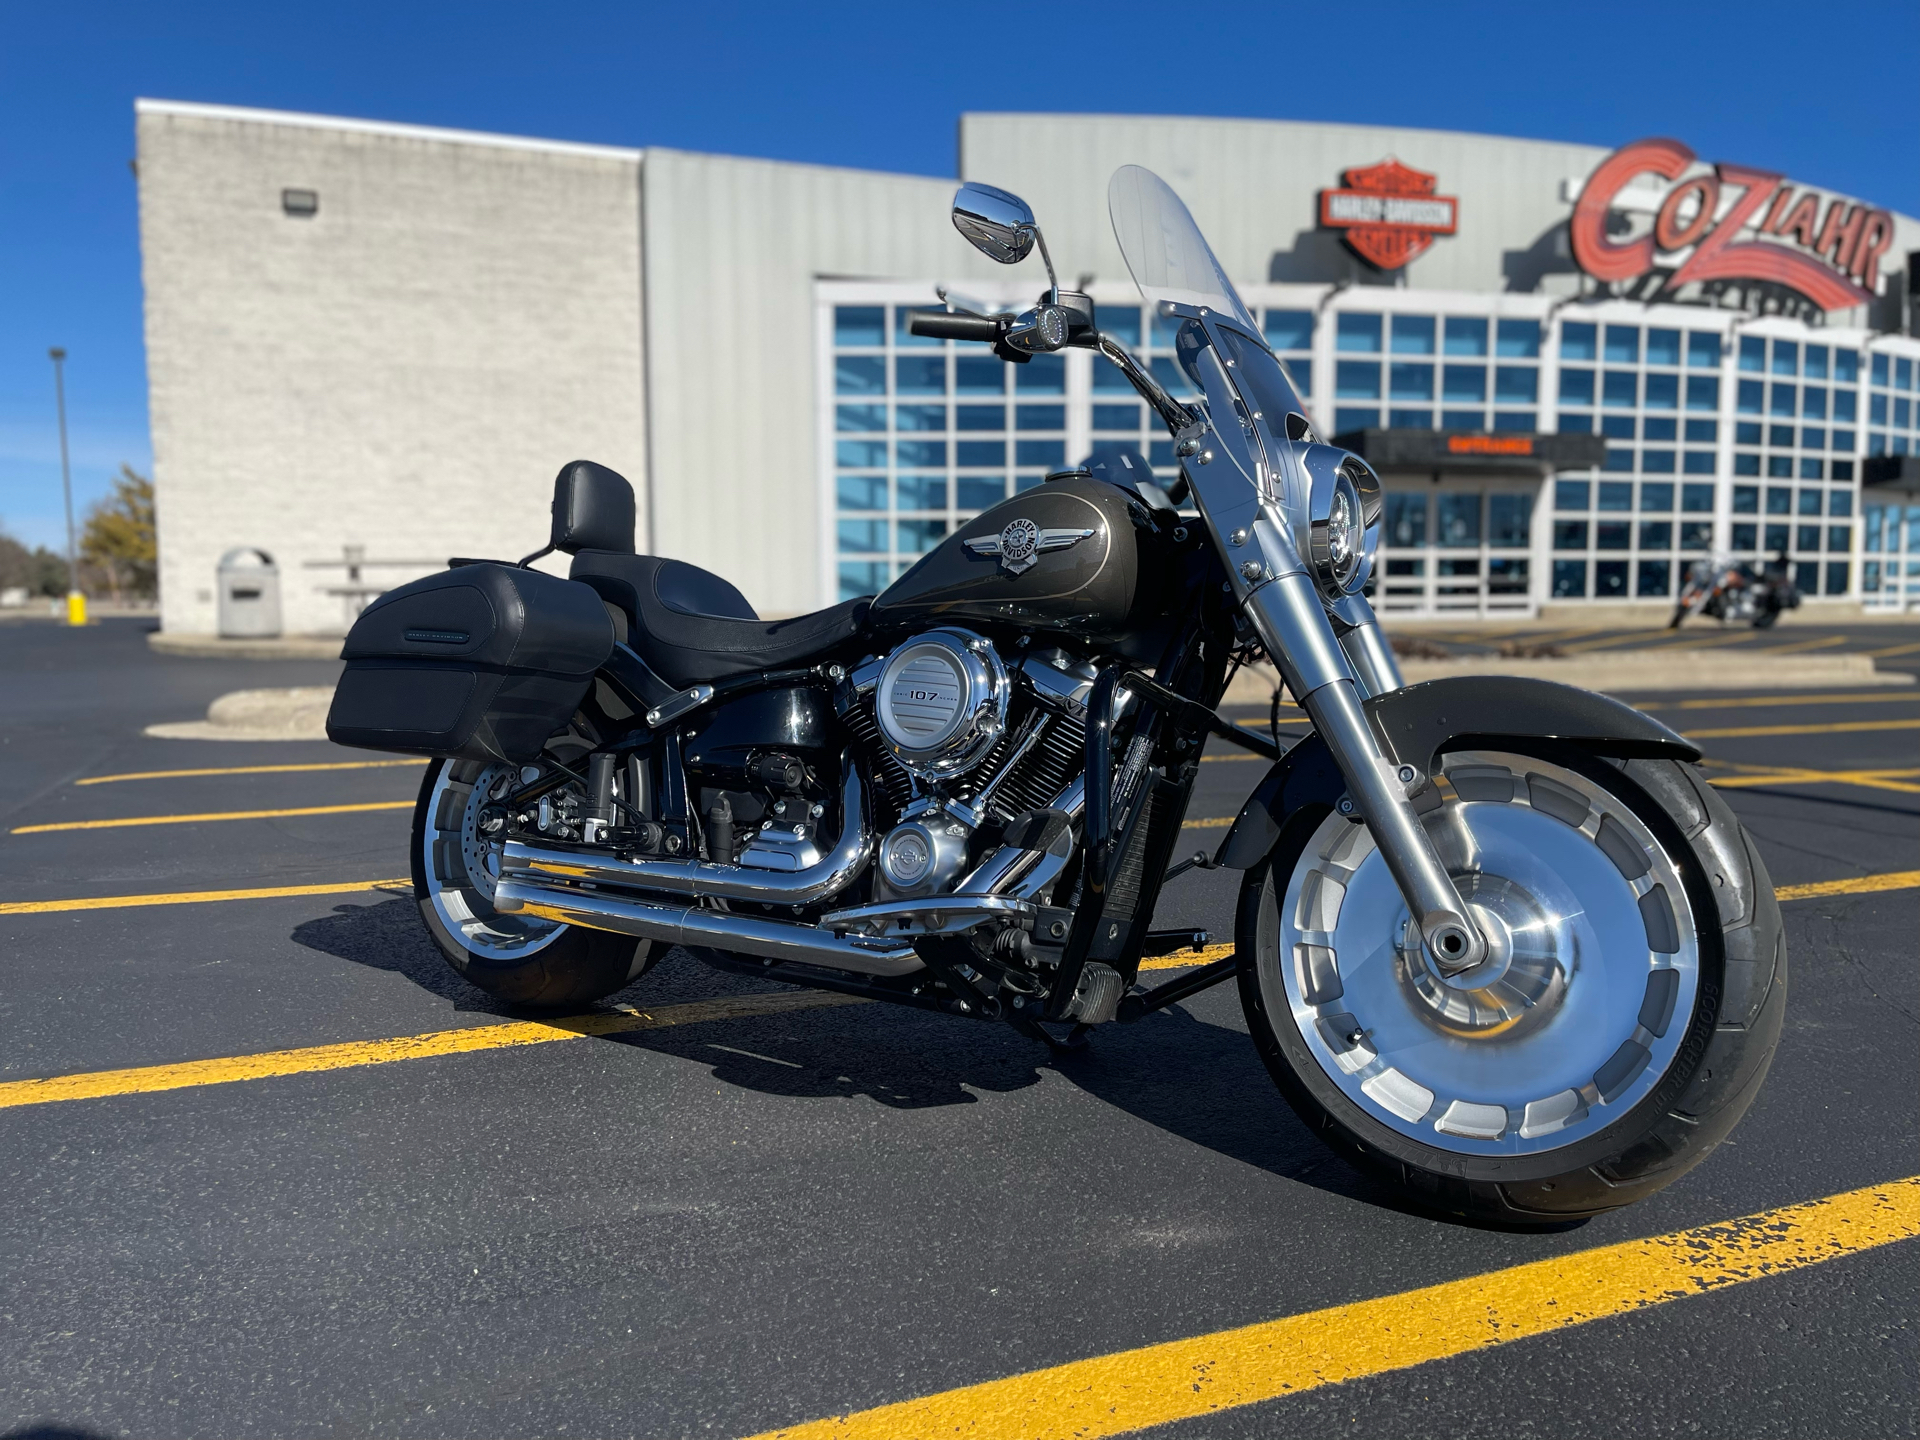 2018 Harley-Davidson Fat Boy® 107 in Forsyth, Illinois - Photo 2